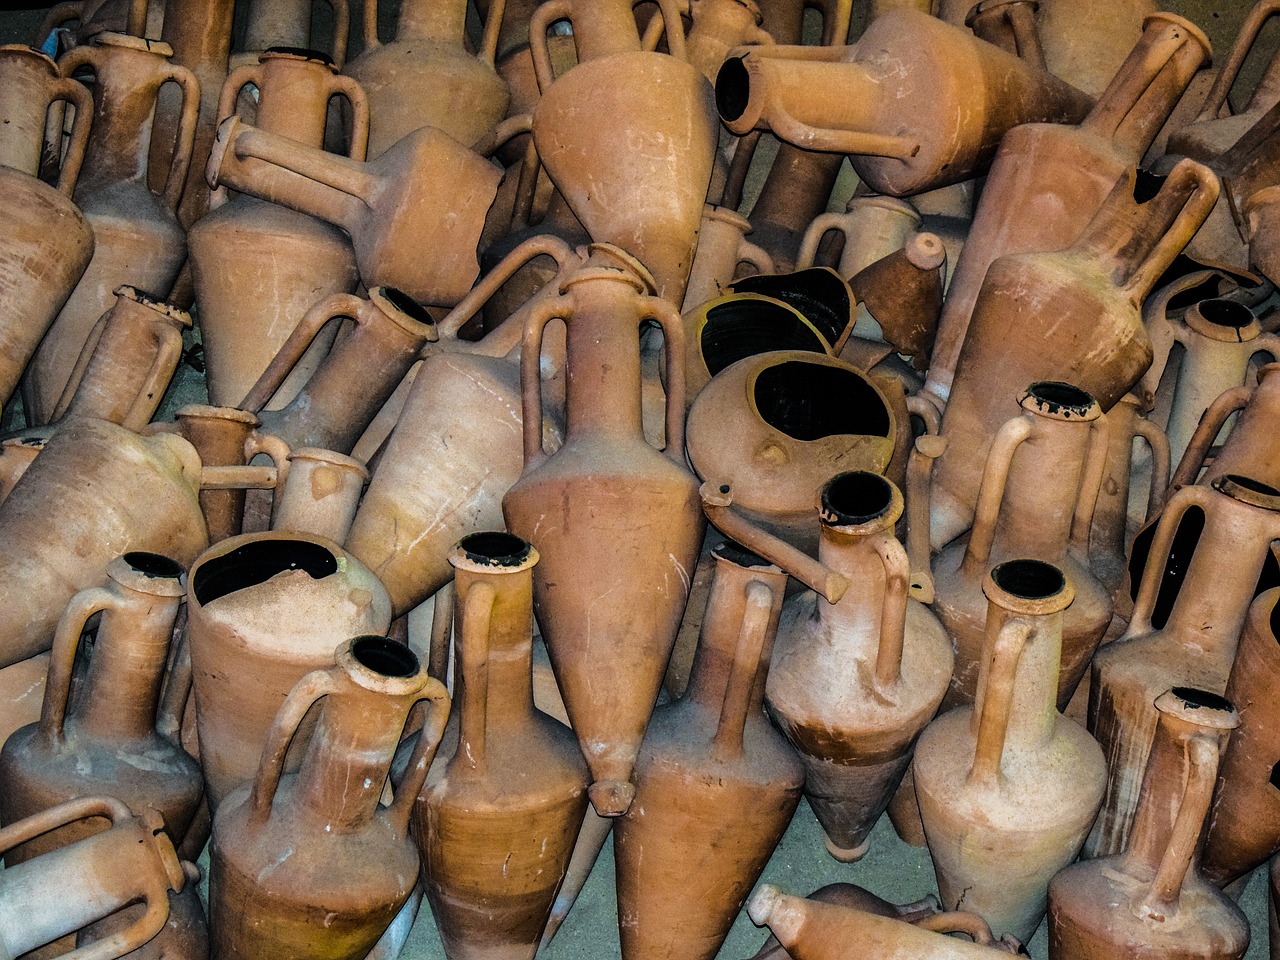 Image - amphorae clay ancient shipwreck